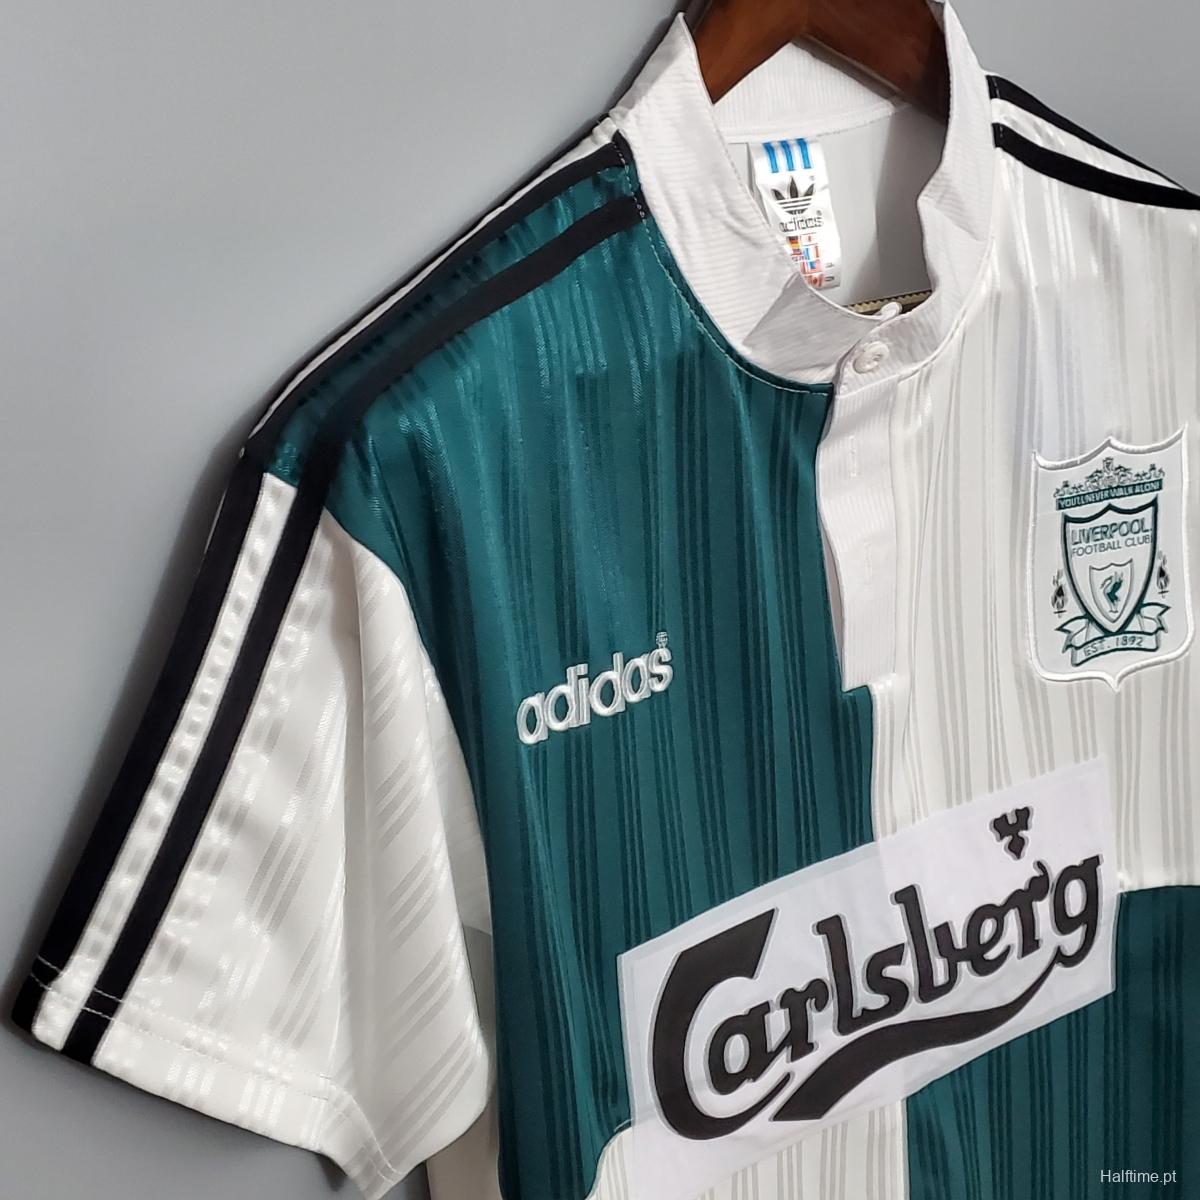 Retro 95/96 Liverpool away Soccer Jersey